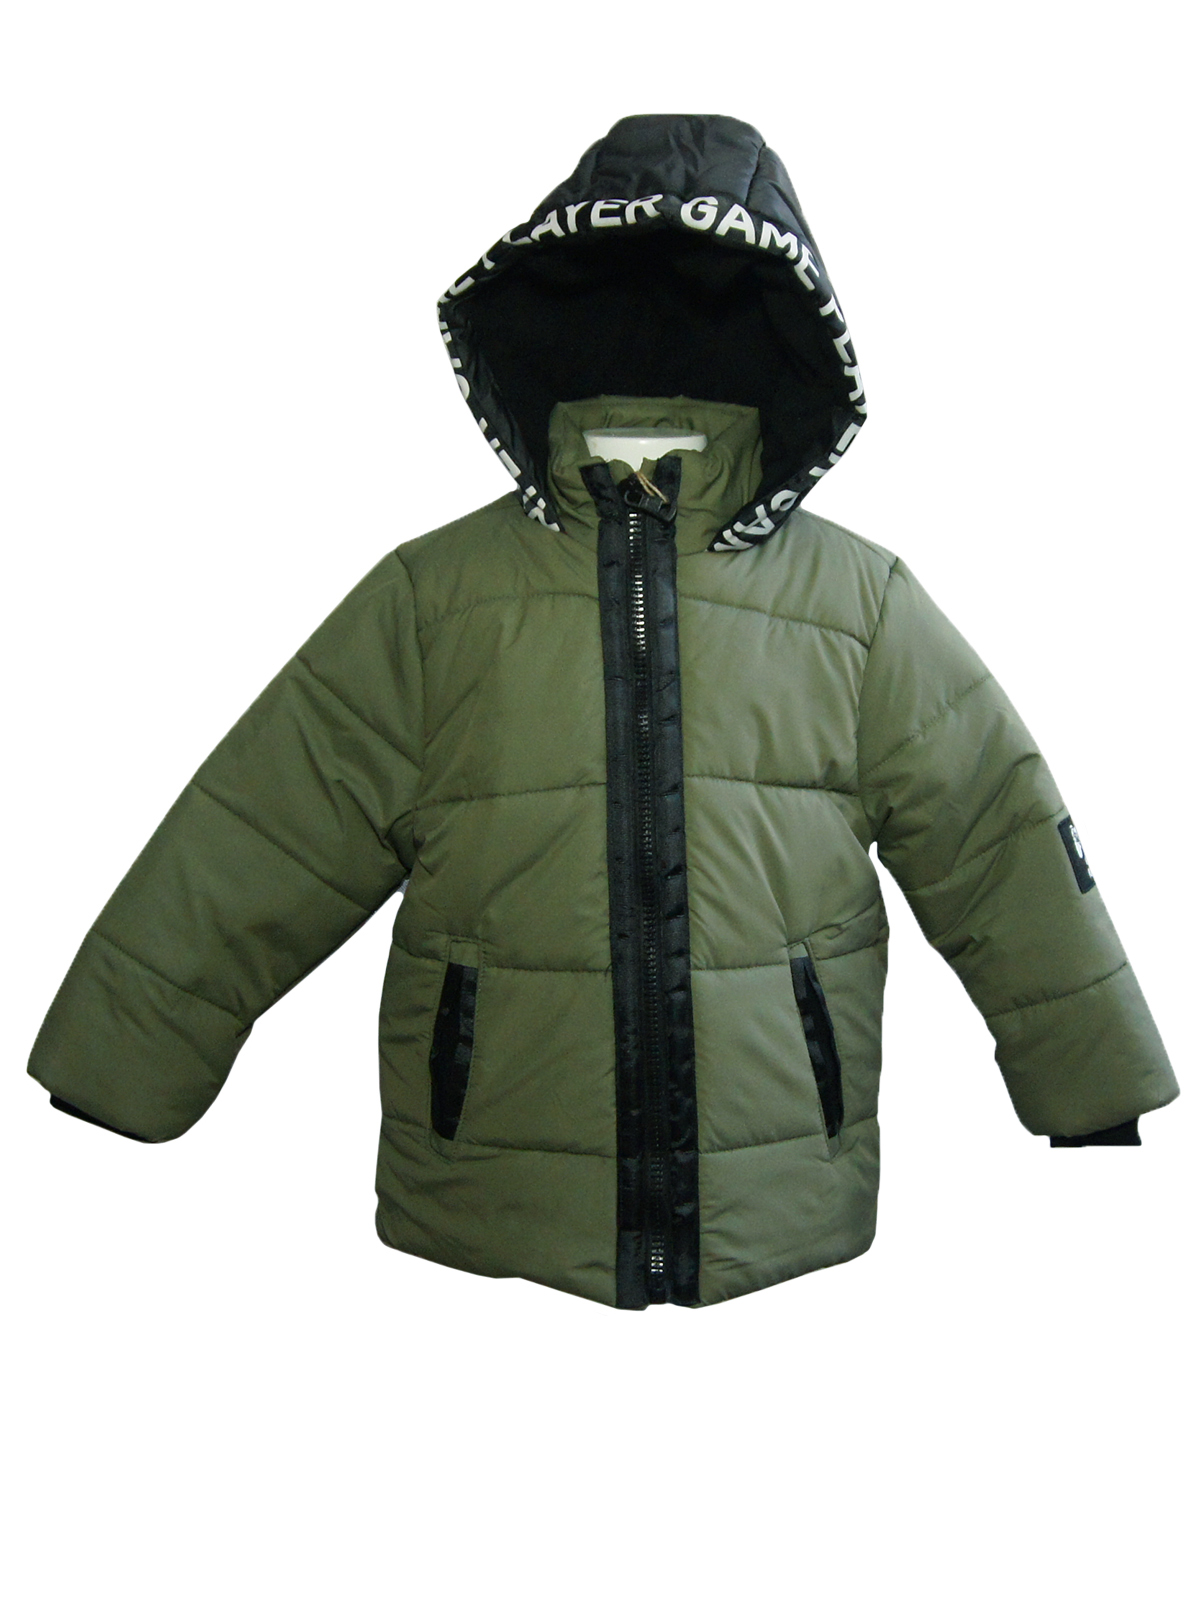 Куртка детская MDM MIDIMOD GOLD 20861, хаки, 92 комплект куртка и полукомбинезон хаки moncler детский